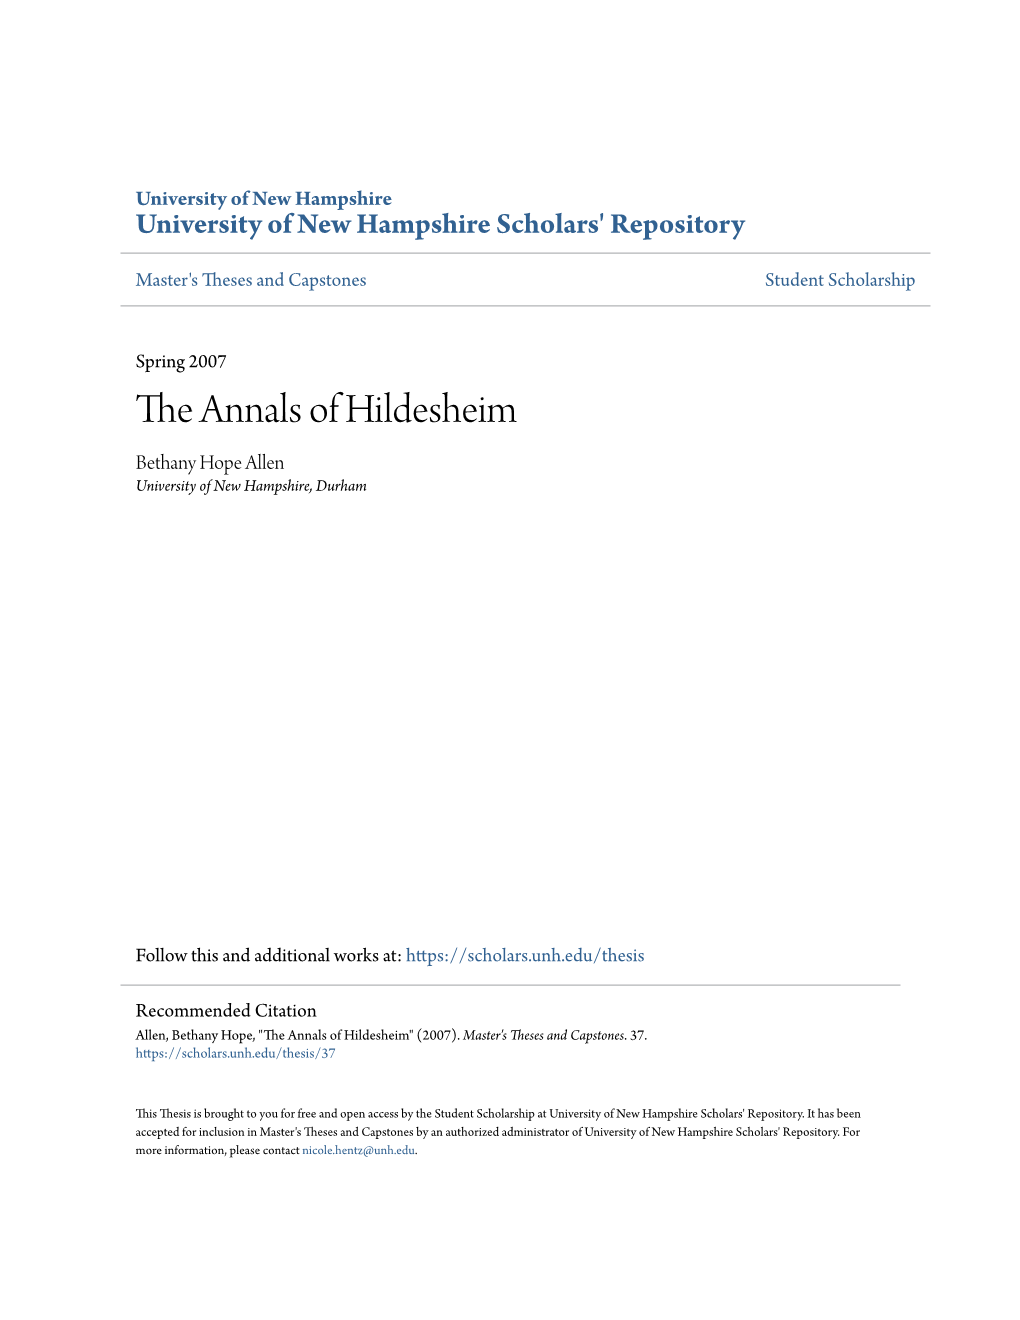 The Annals of Hildesheim Bethany Hope Allen University of New Hampshire, Durham